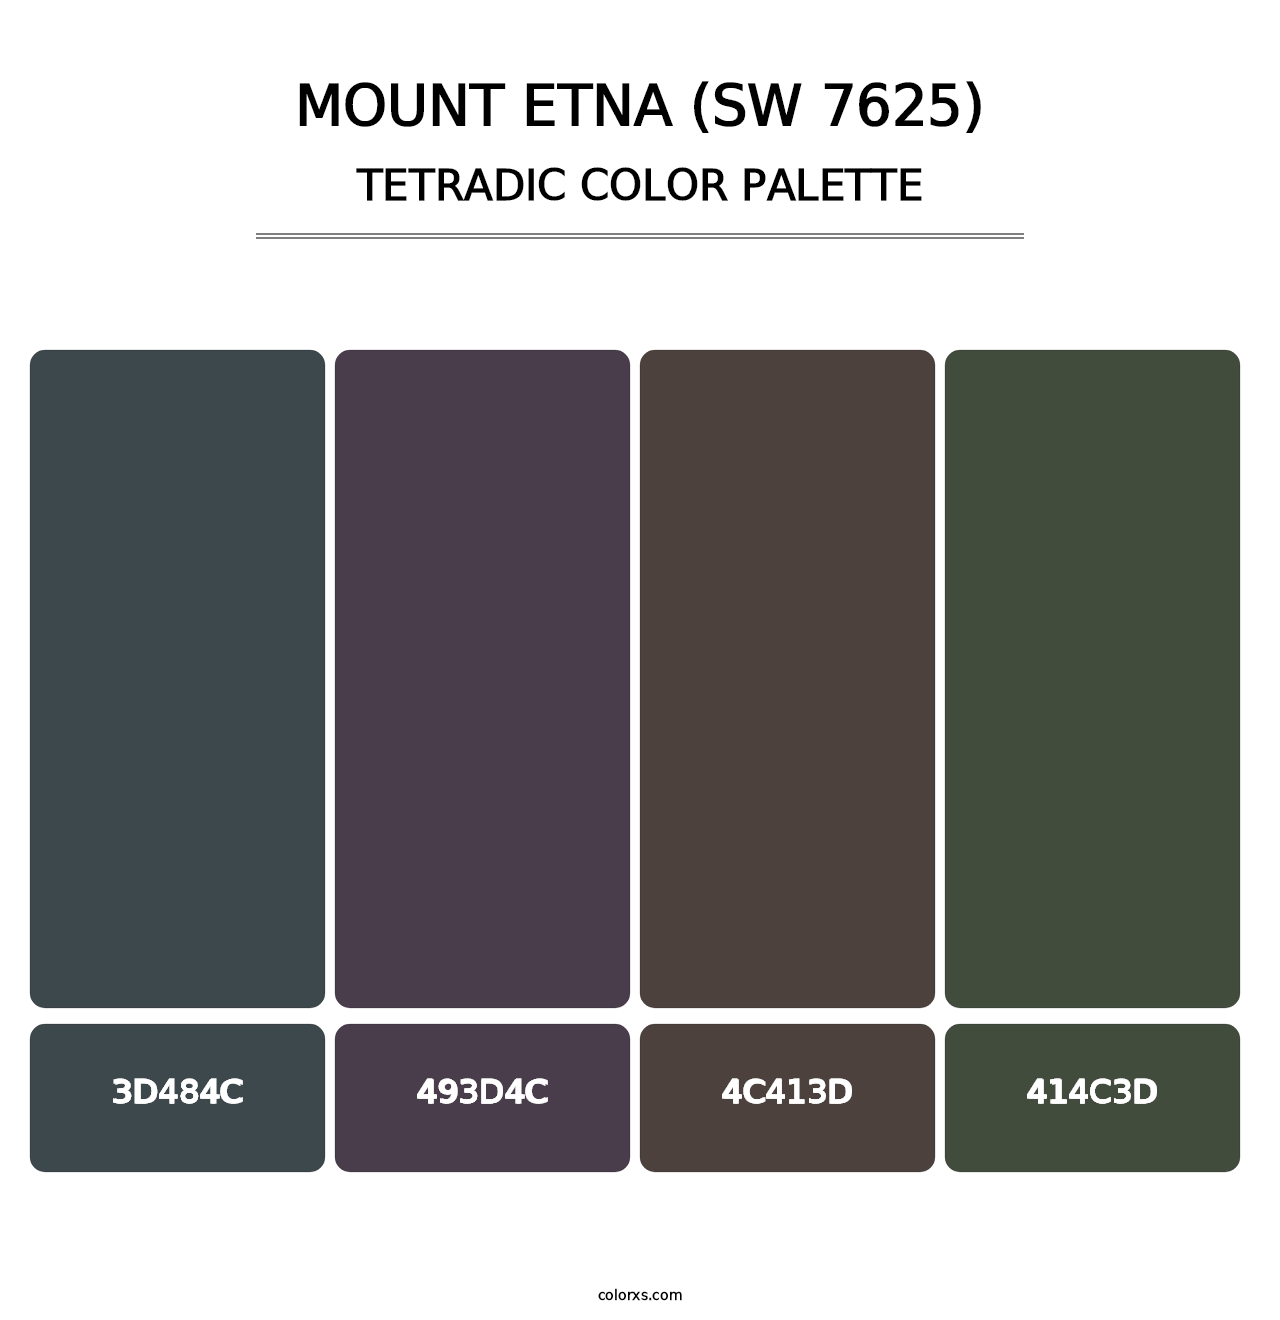 Mount Etna (SW 7625) - Tetradic Color Palette